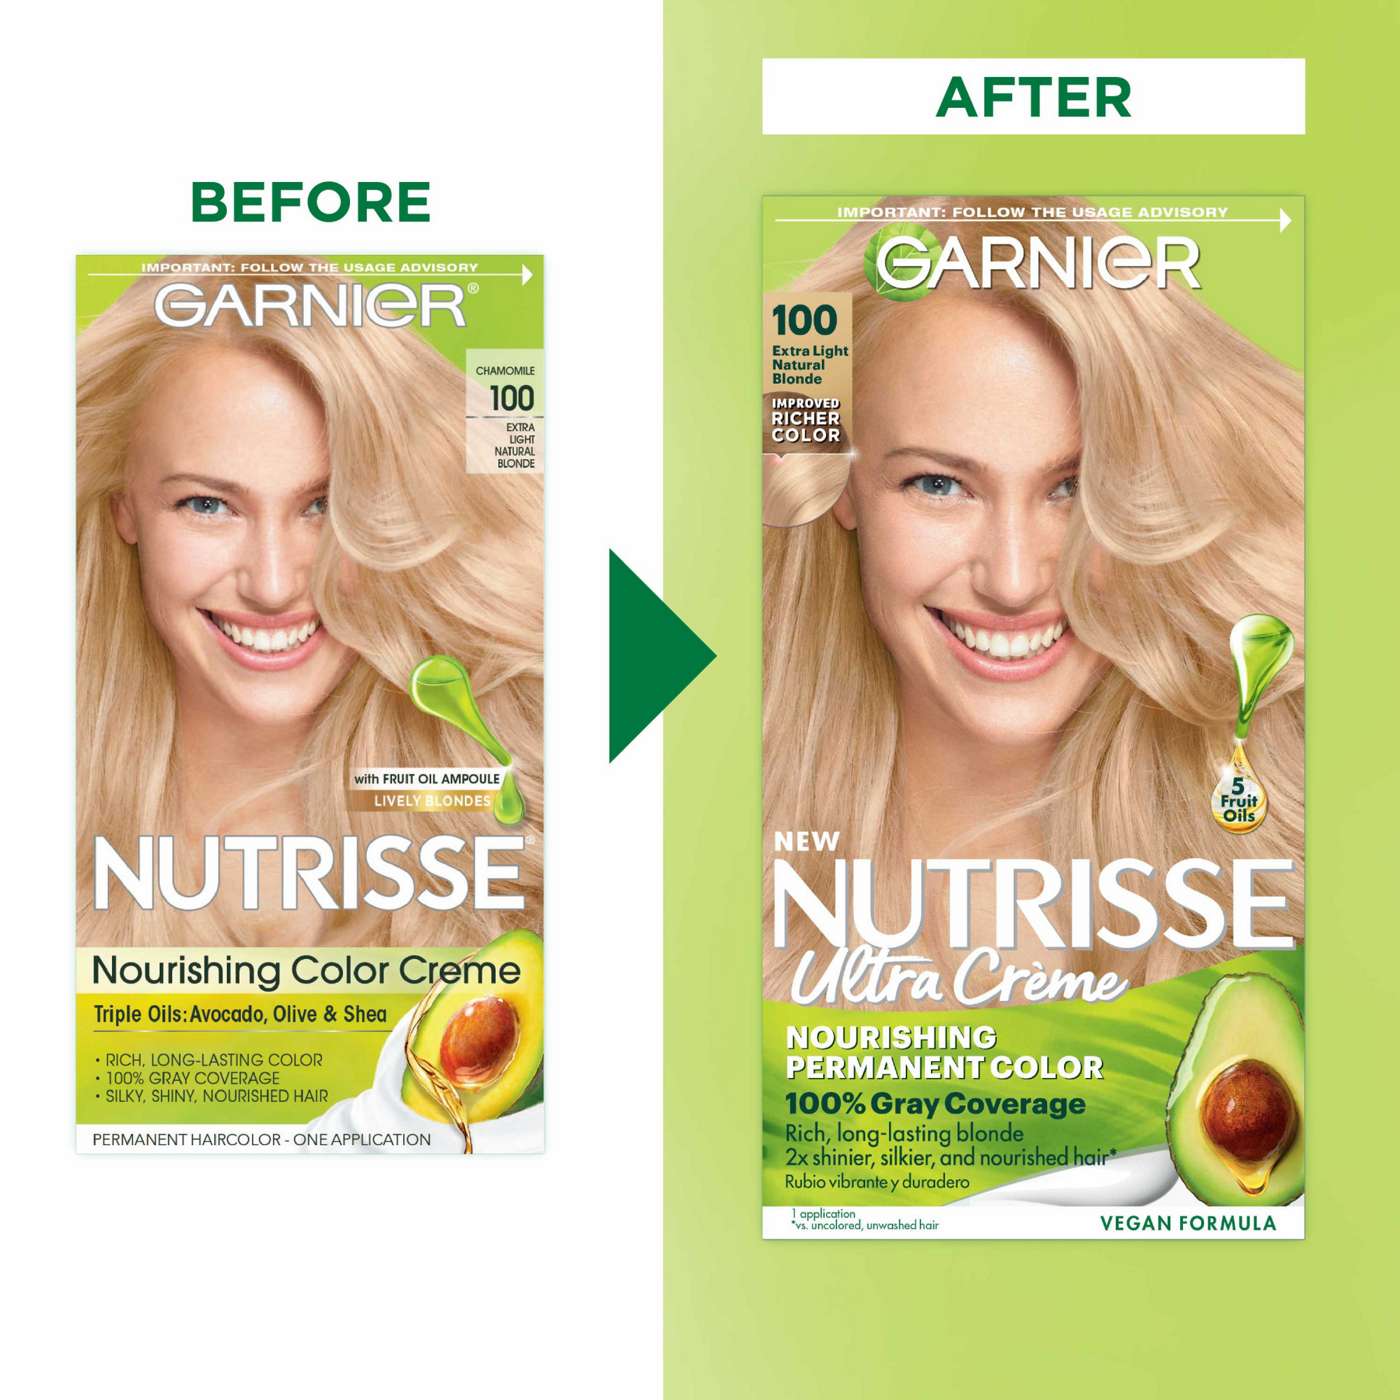 Garnier Nutrisse Nourishing Hair Color Creme - 100 Extra-Light Natural Blonde (Chamomile); image 7 of 16